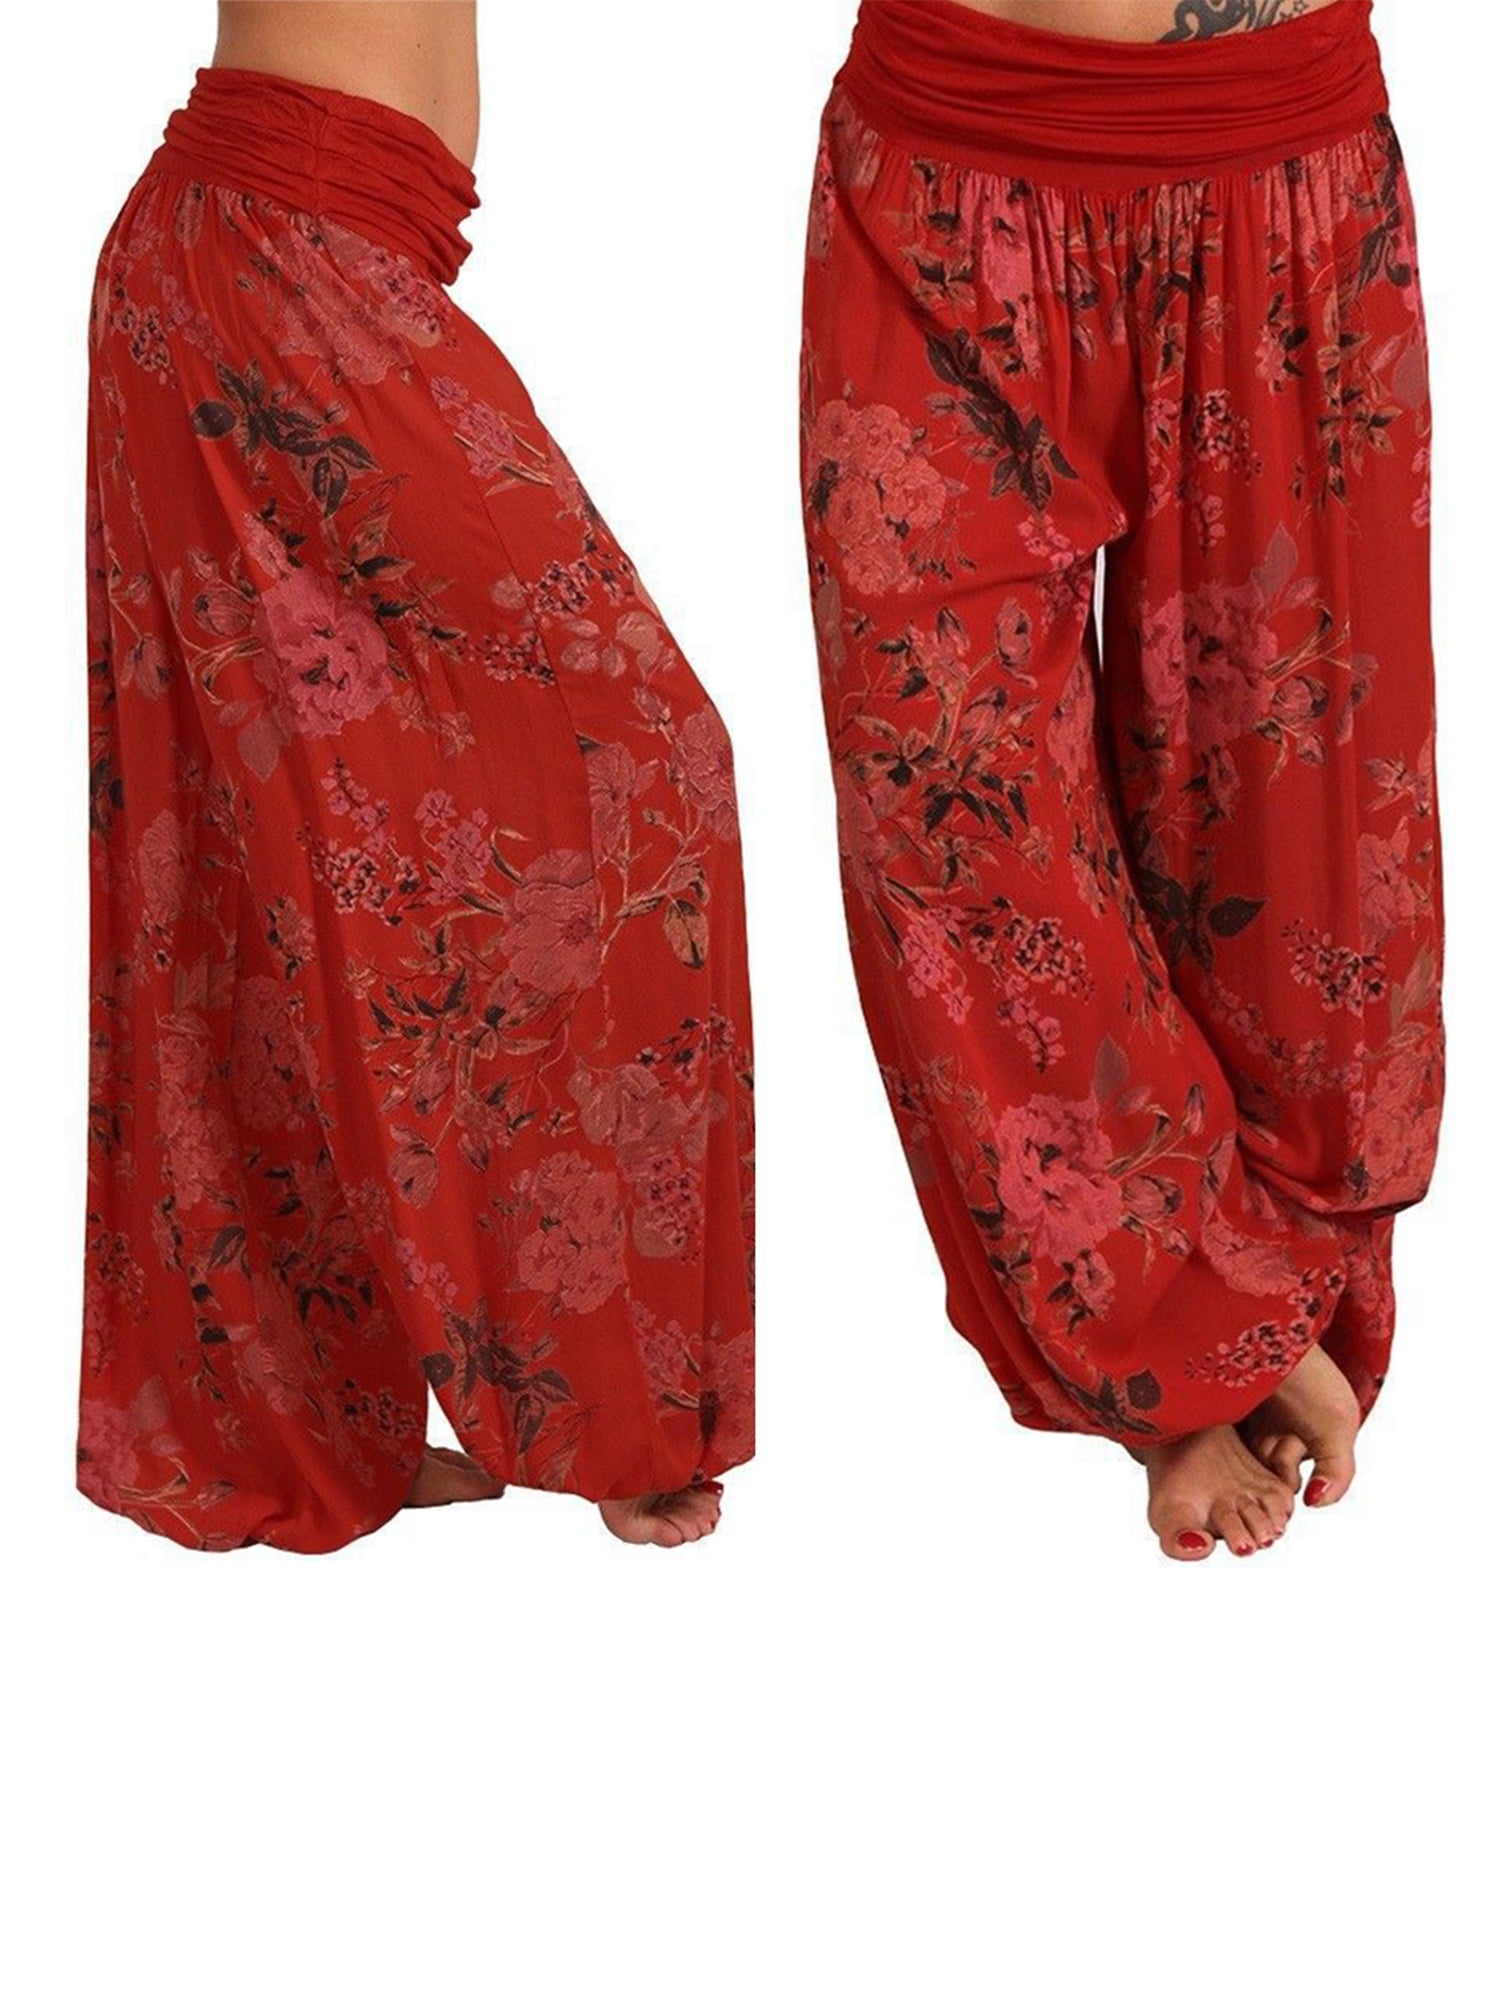 TUCUTE Women's Sarina Fabric Patiala Style Flower Print Harem Pants  (Wine_4798)